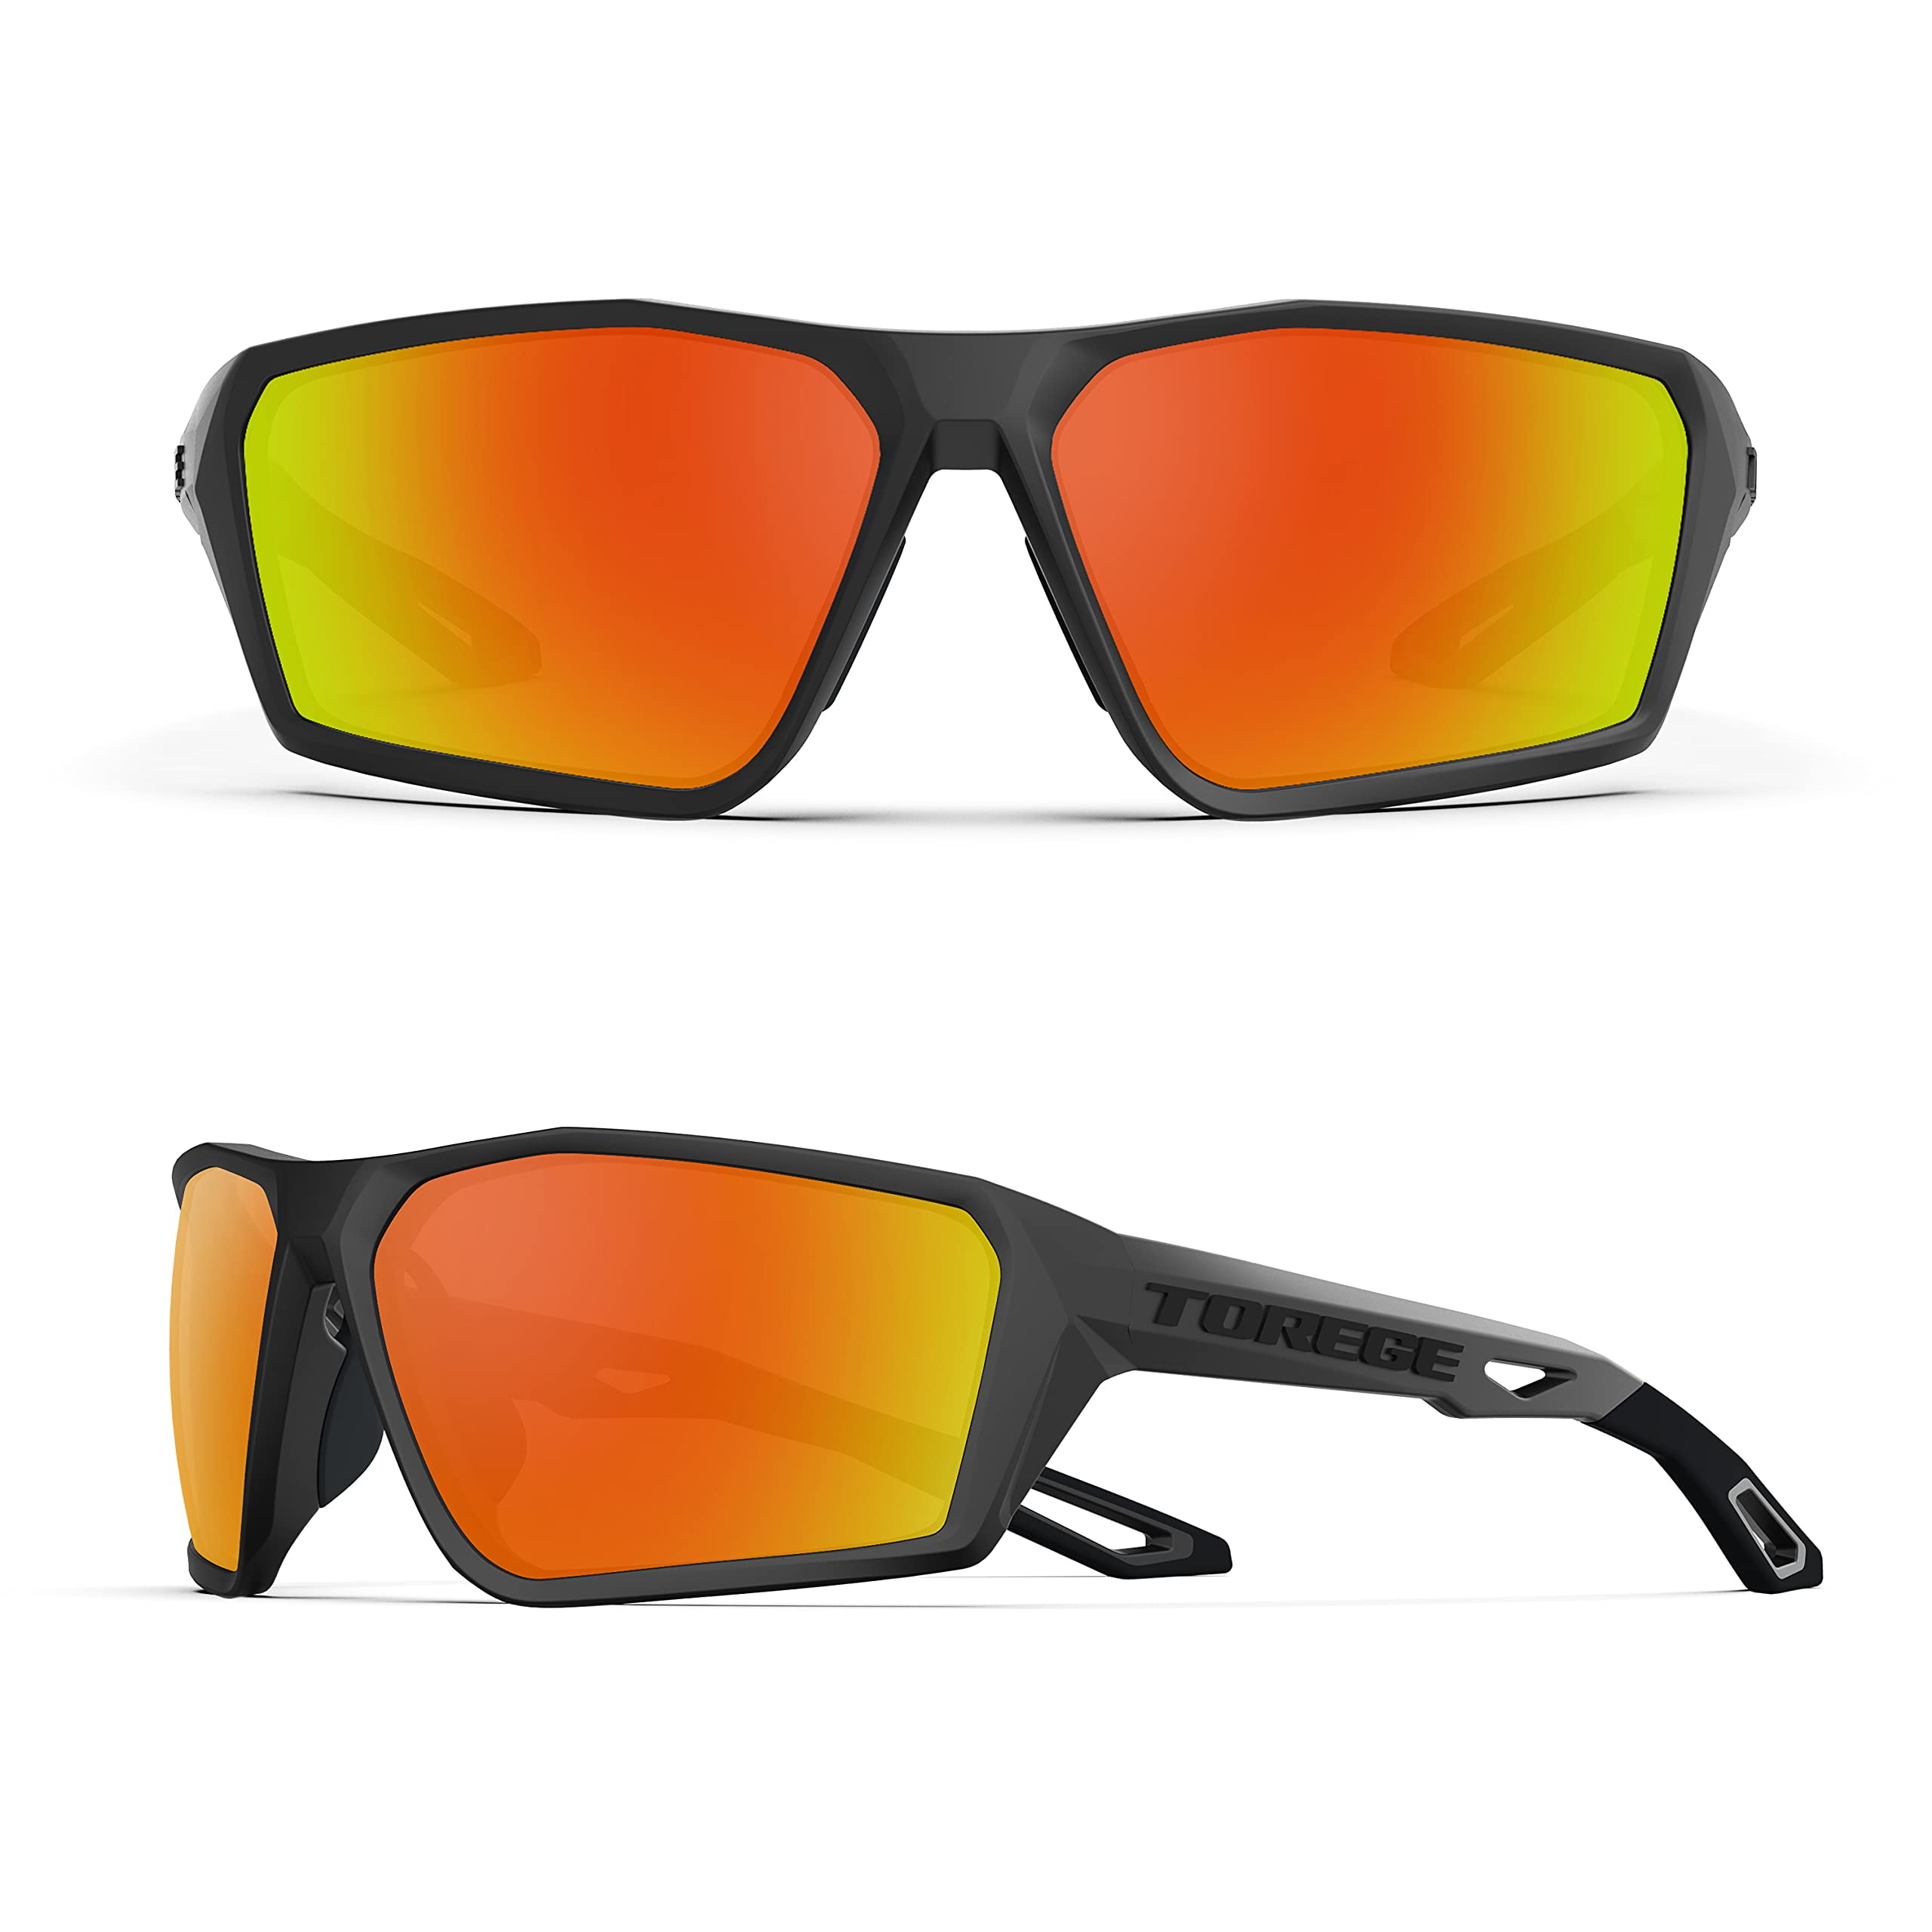 TOREGE Sports Polarized Unisex Sunglasses for fishing cycling